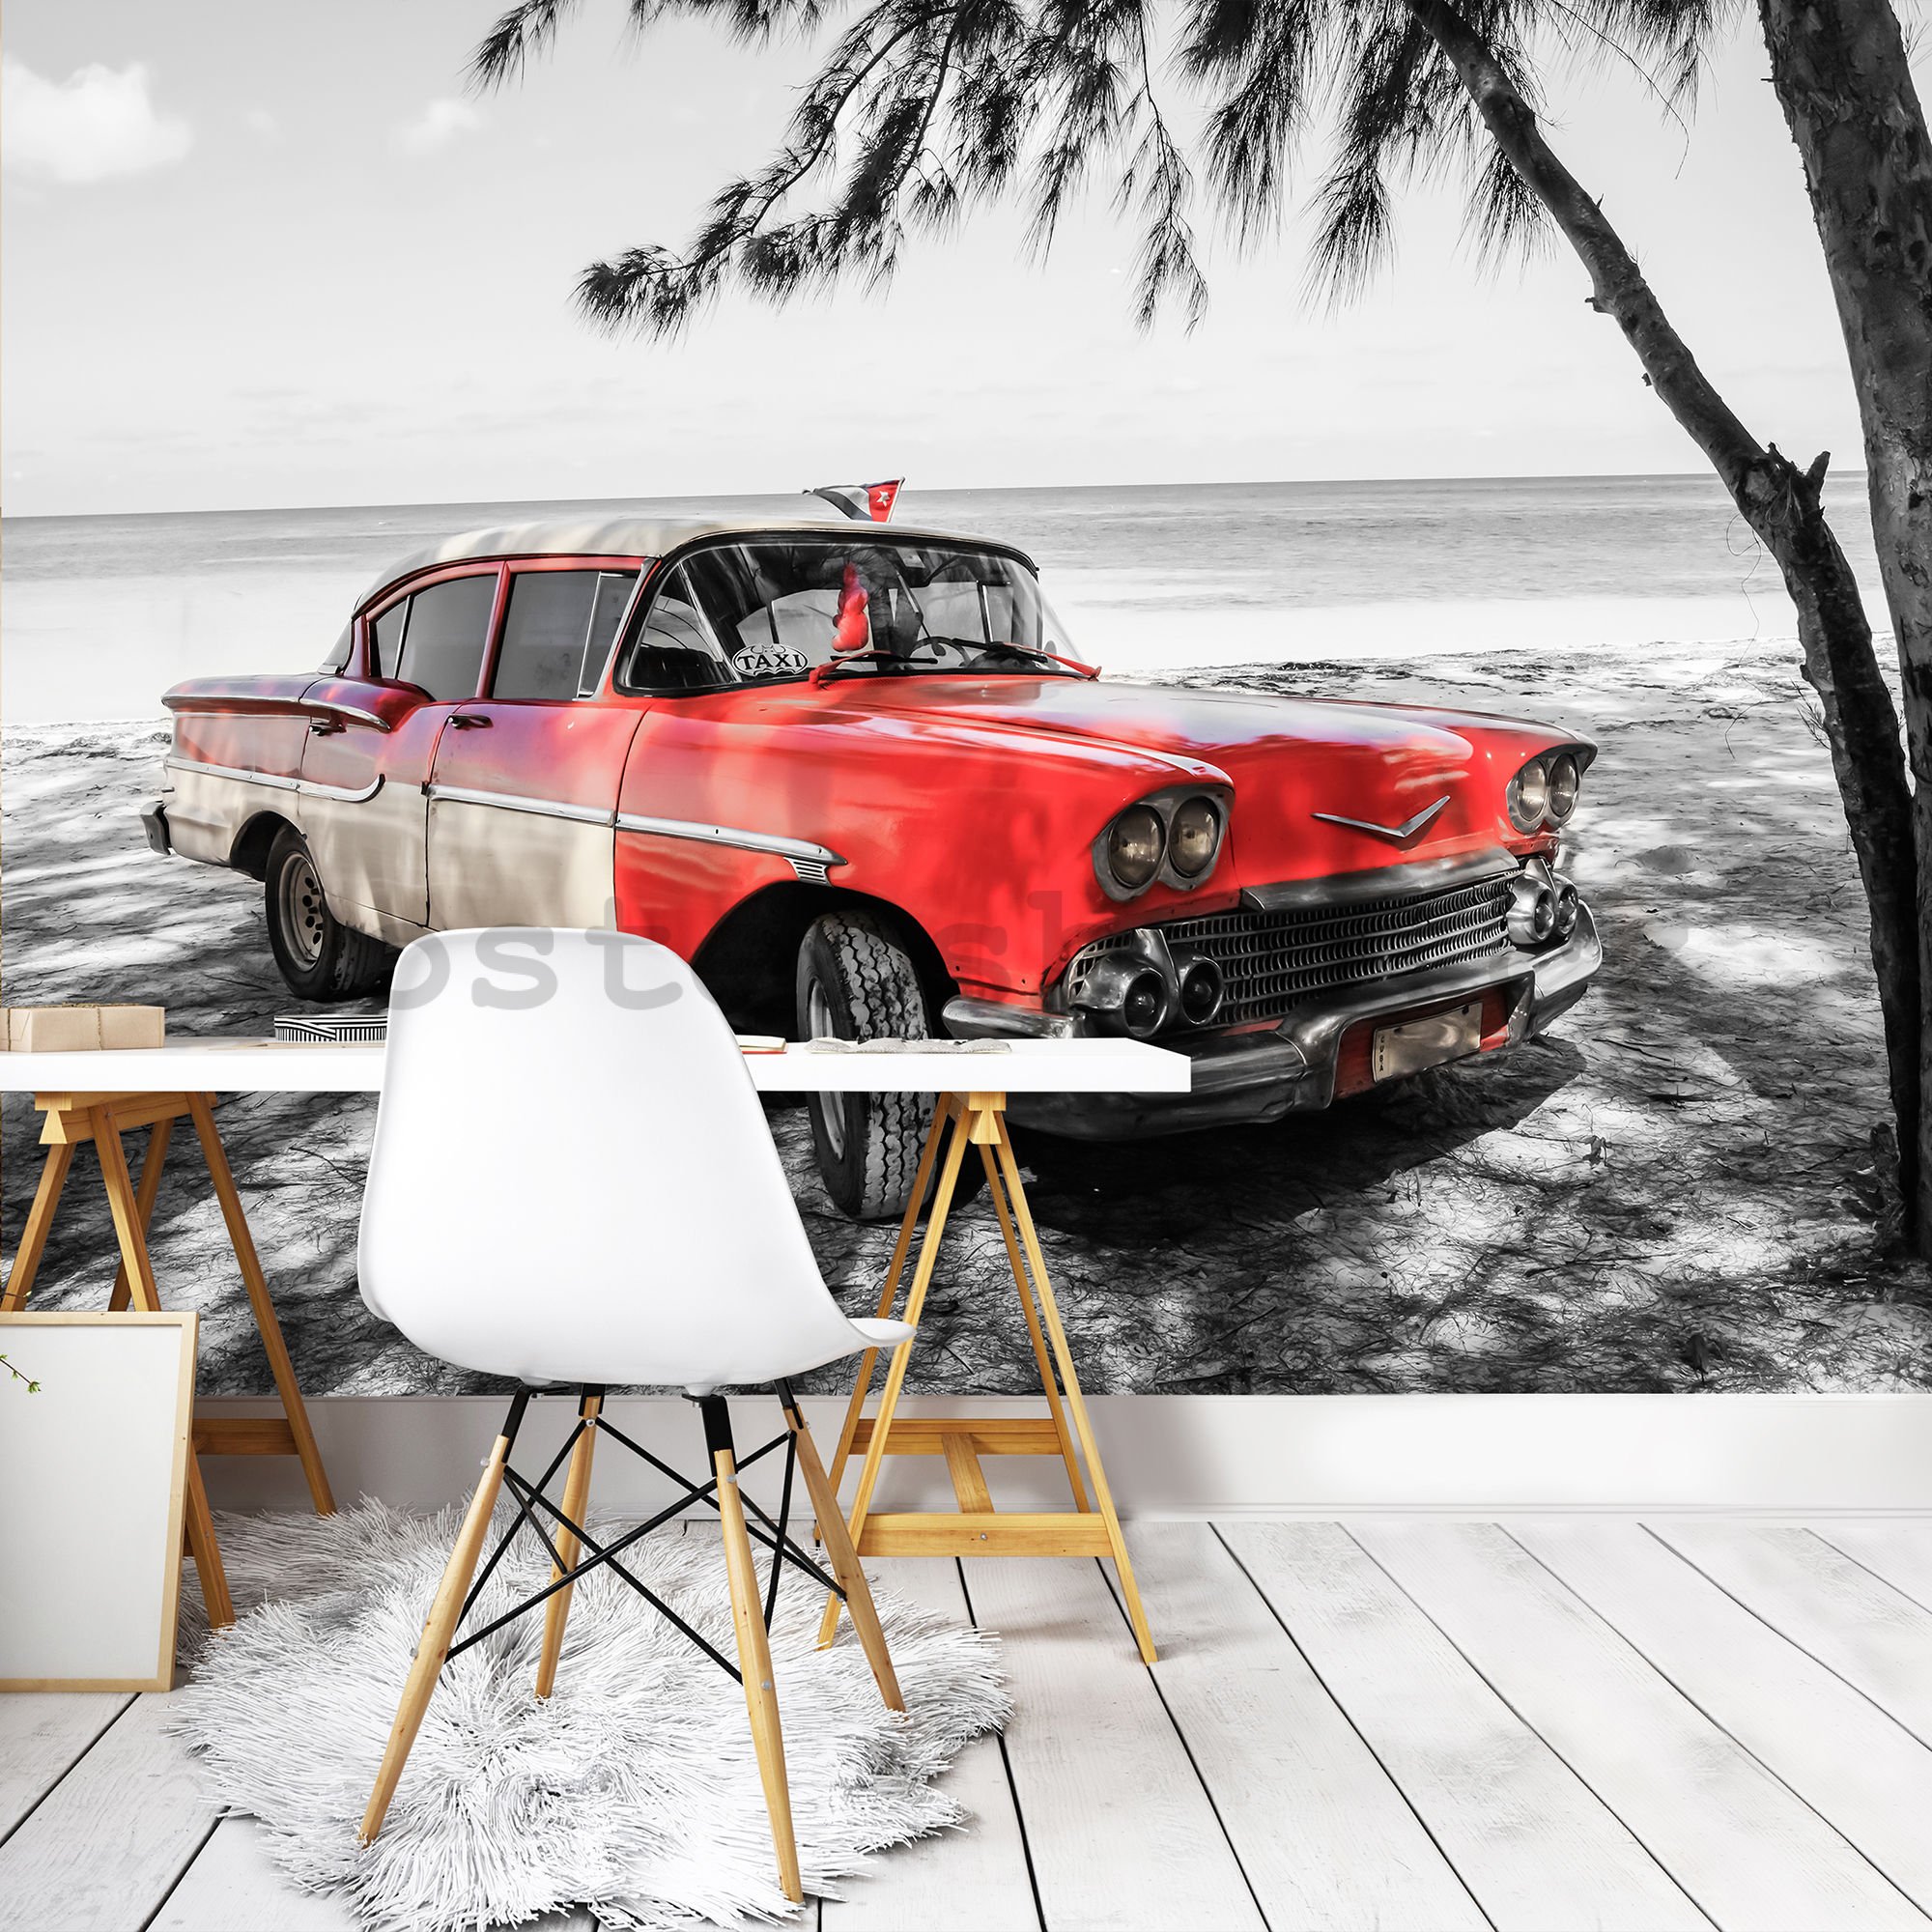 Fototapeta vliesová: Kuba červené auto u moře - 254x368 cm